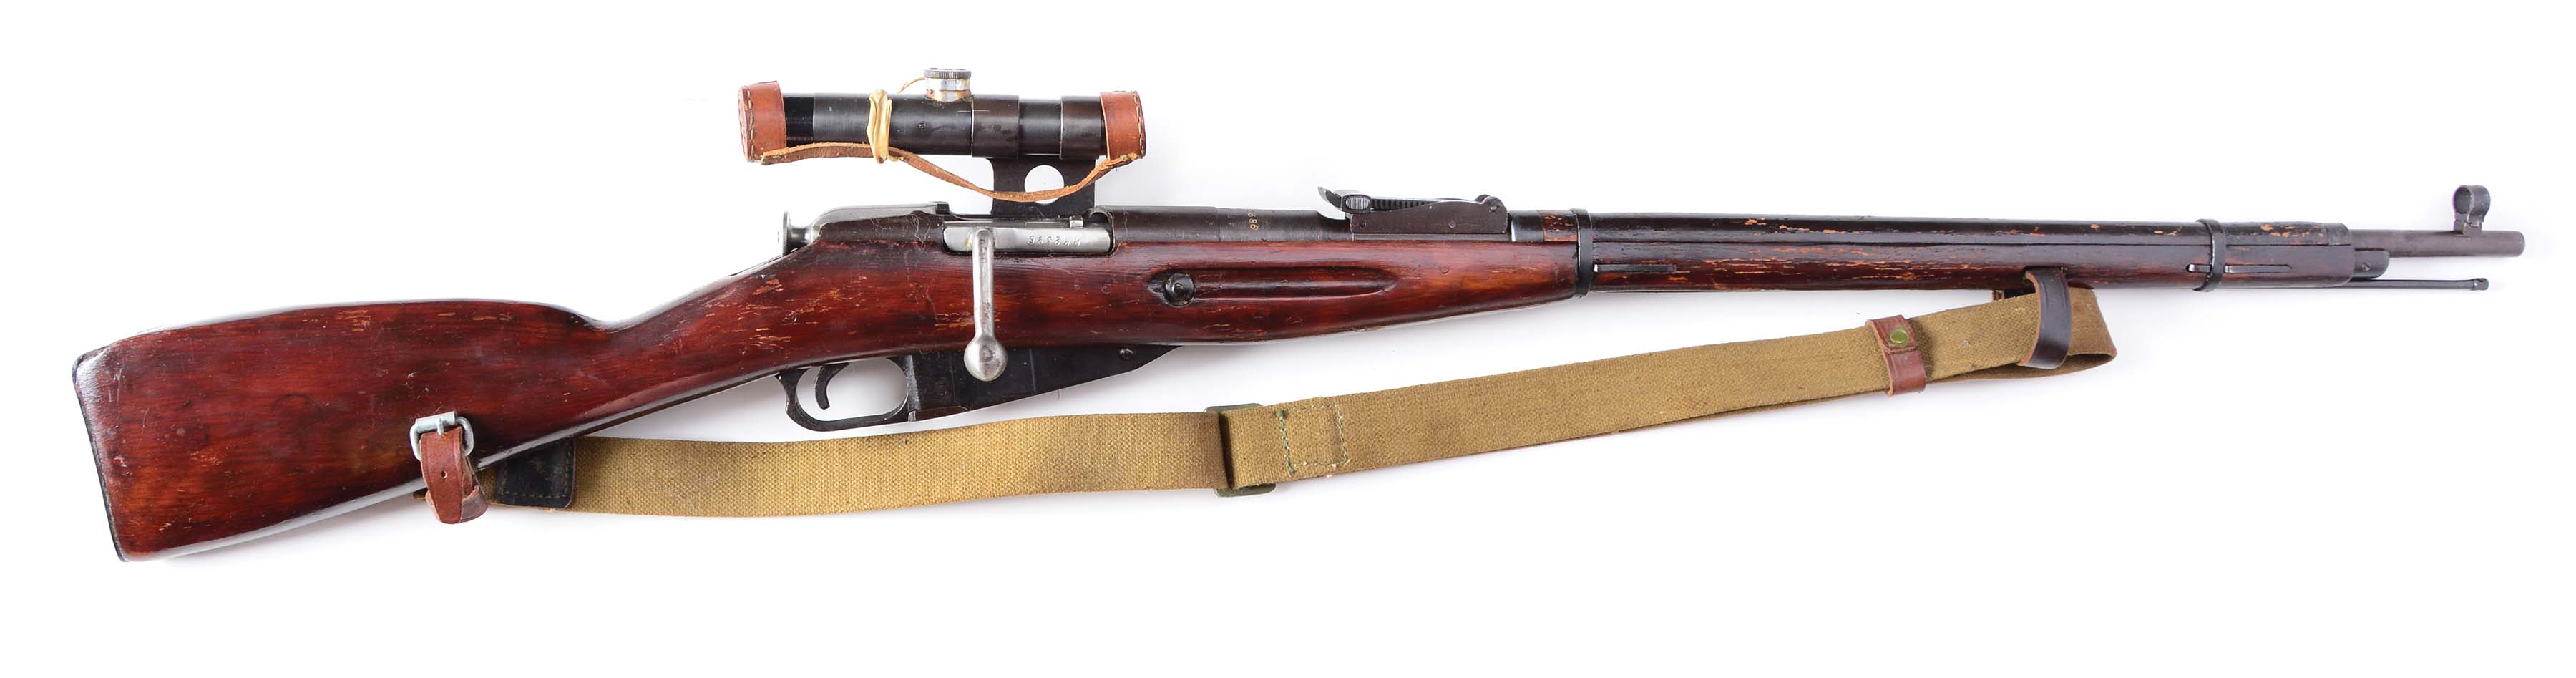 Original Soviet sniper rifle 7.62x54mm cleaning rod